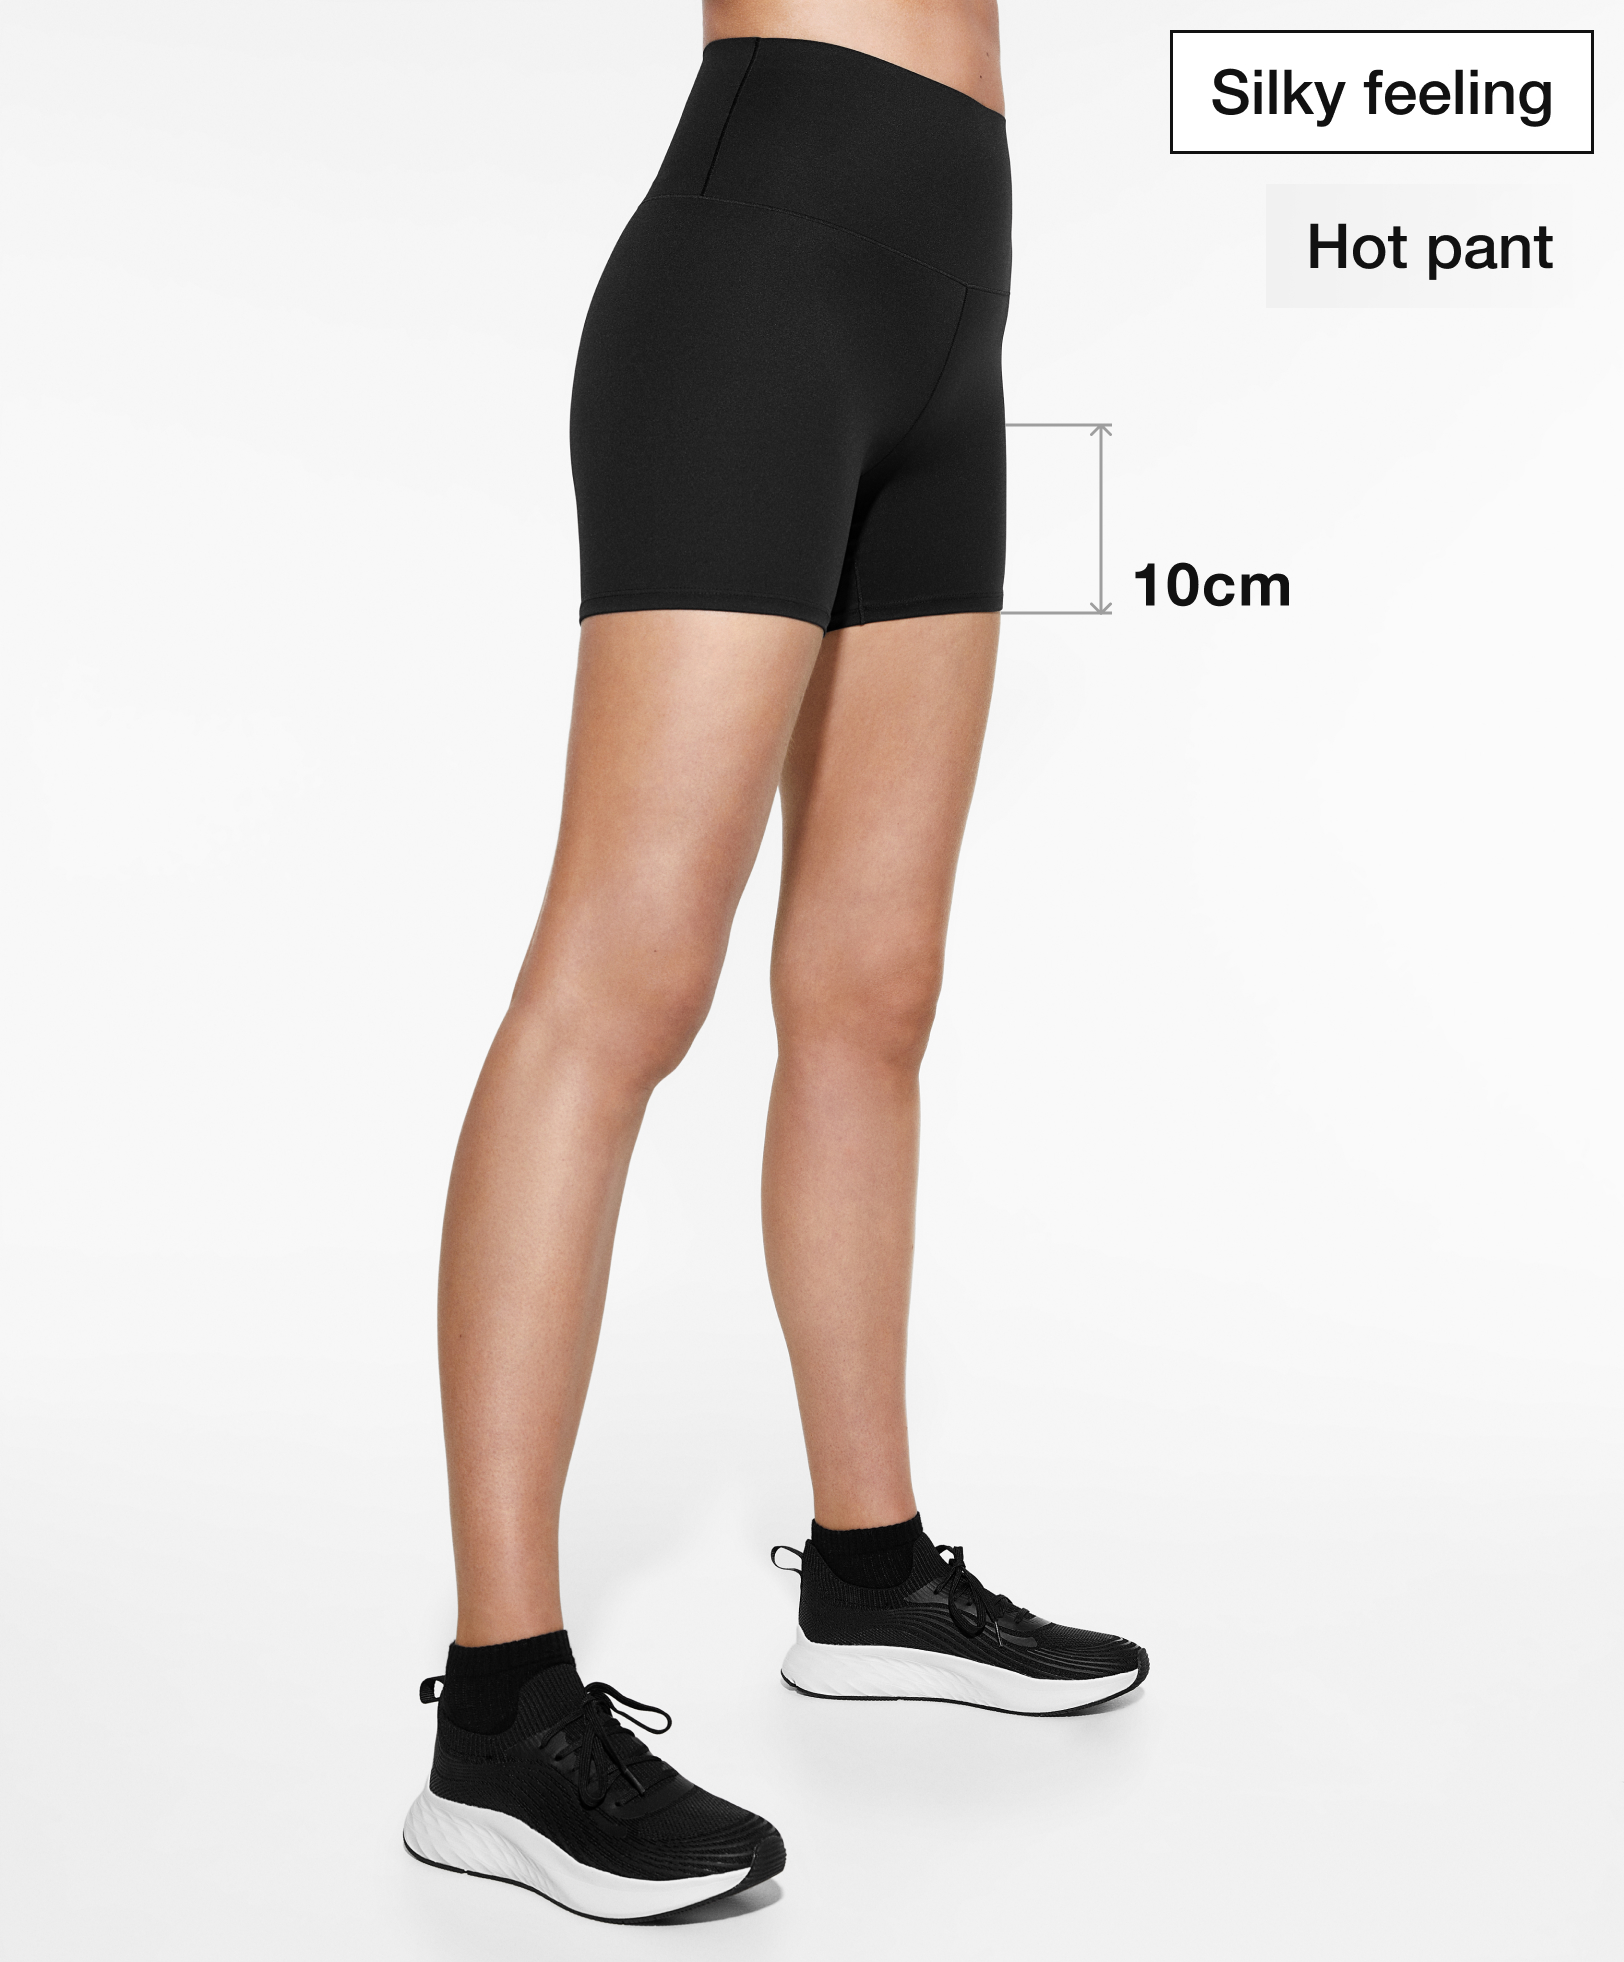 10cm perfect-adapt high rise hot pant 레깅스